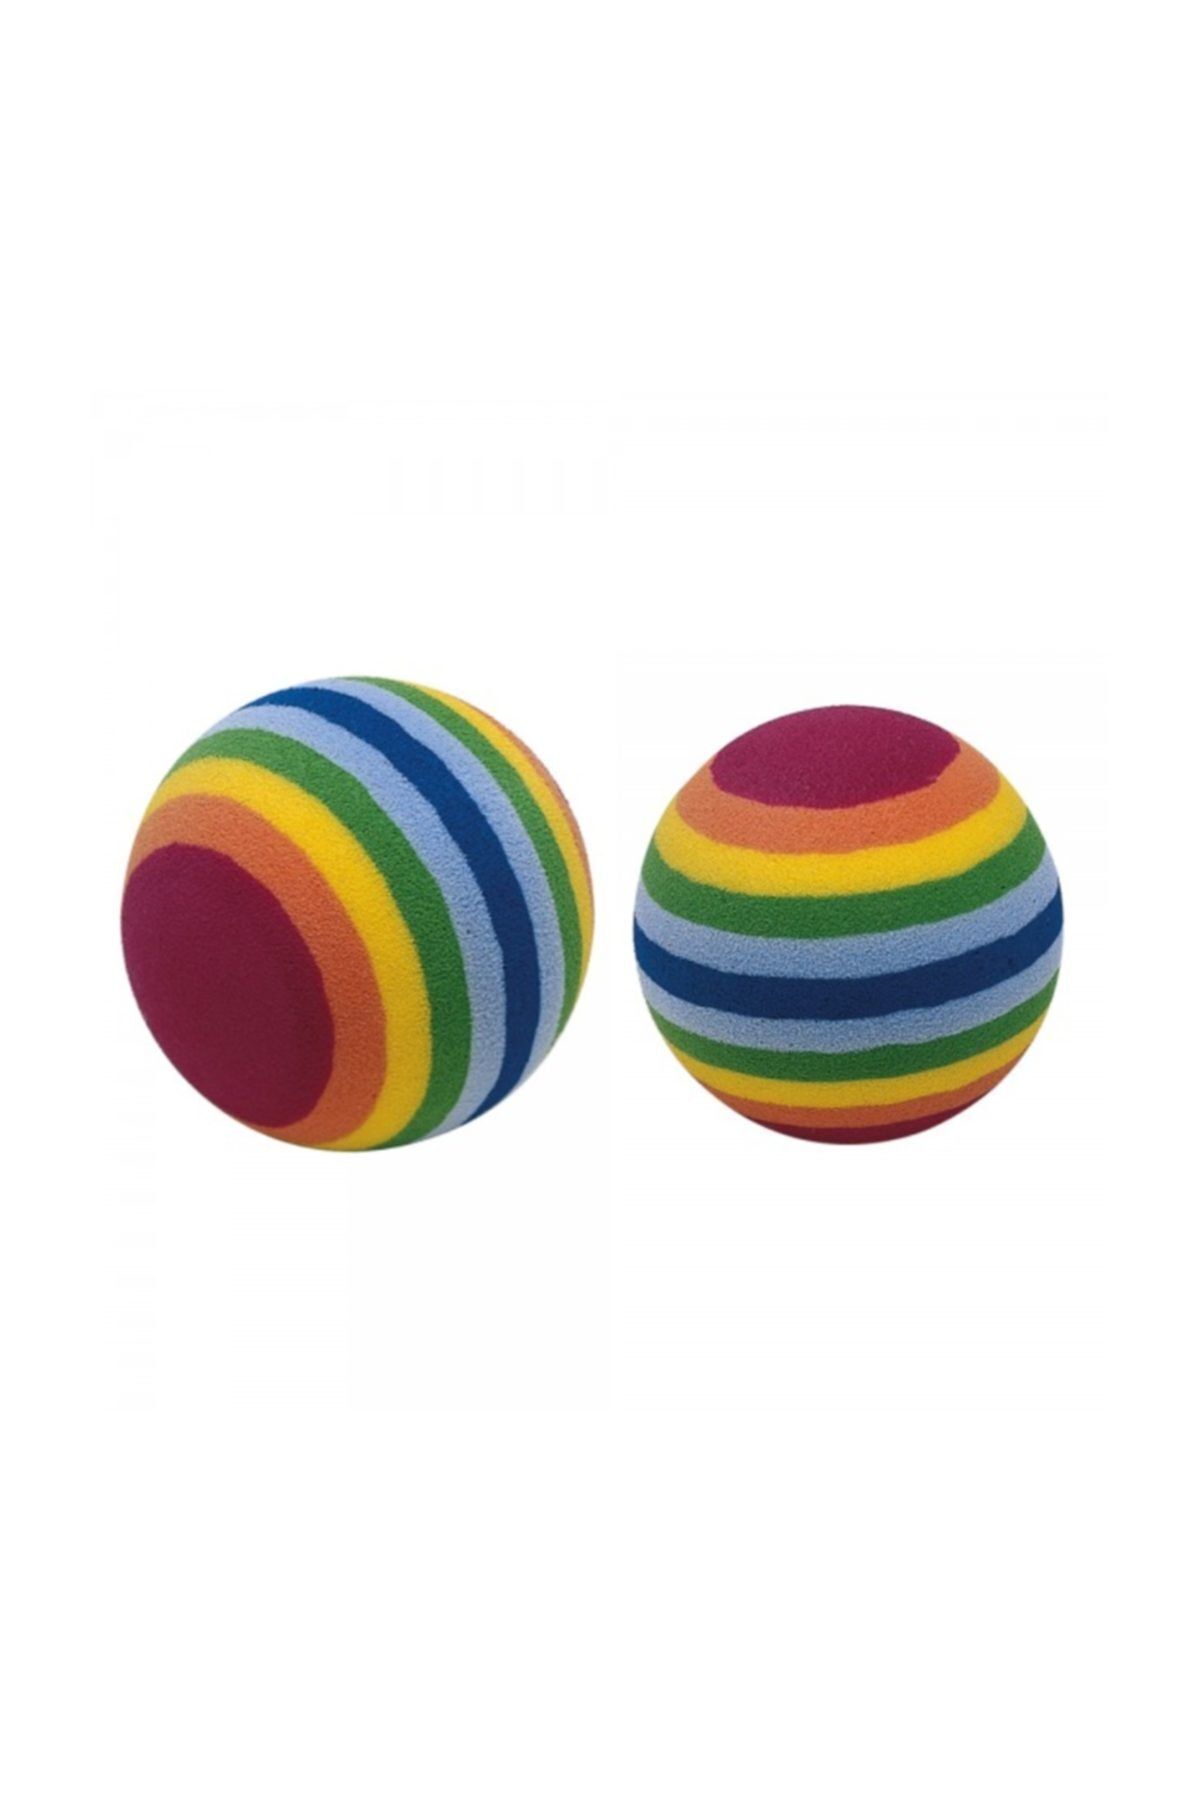 Ferplast Pa 5404 Rainbow Ball Kedi Oyun Top